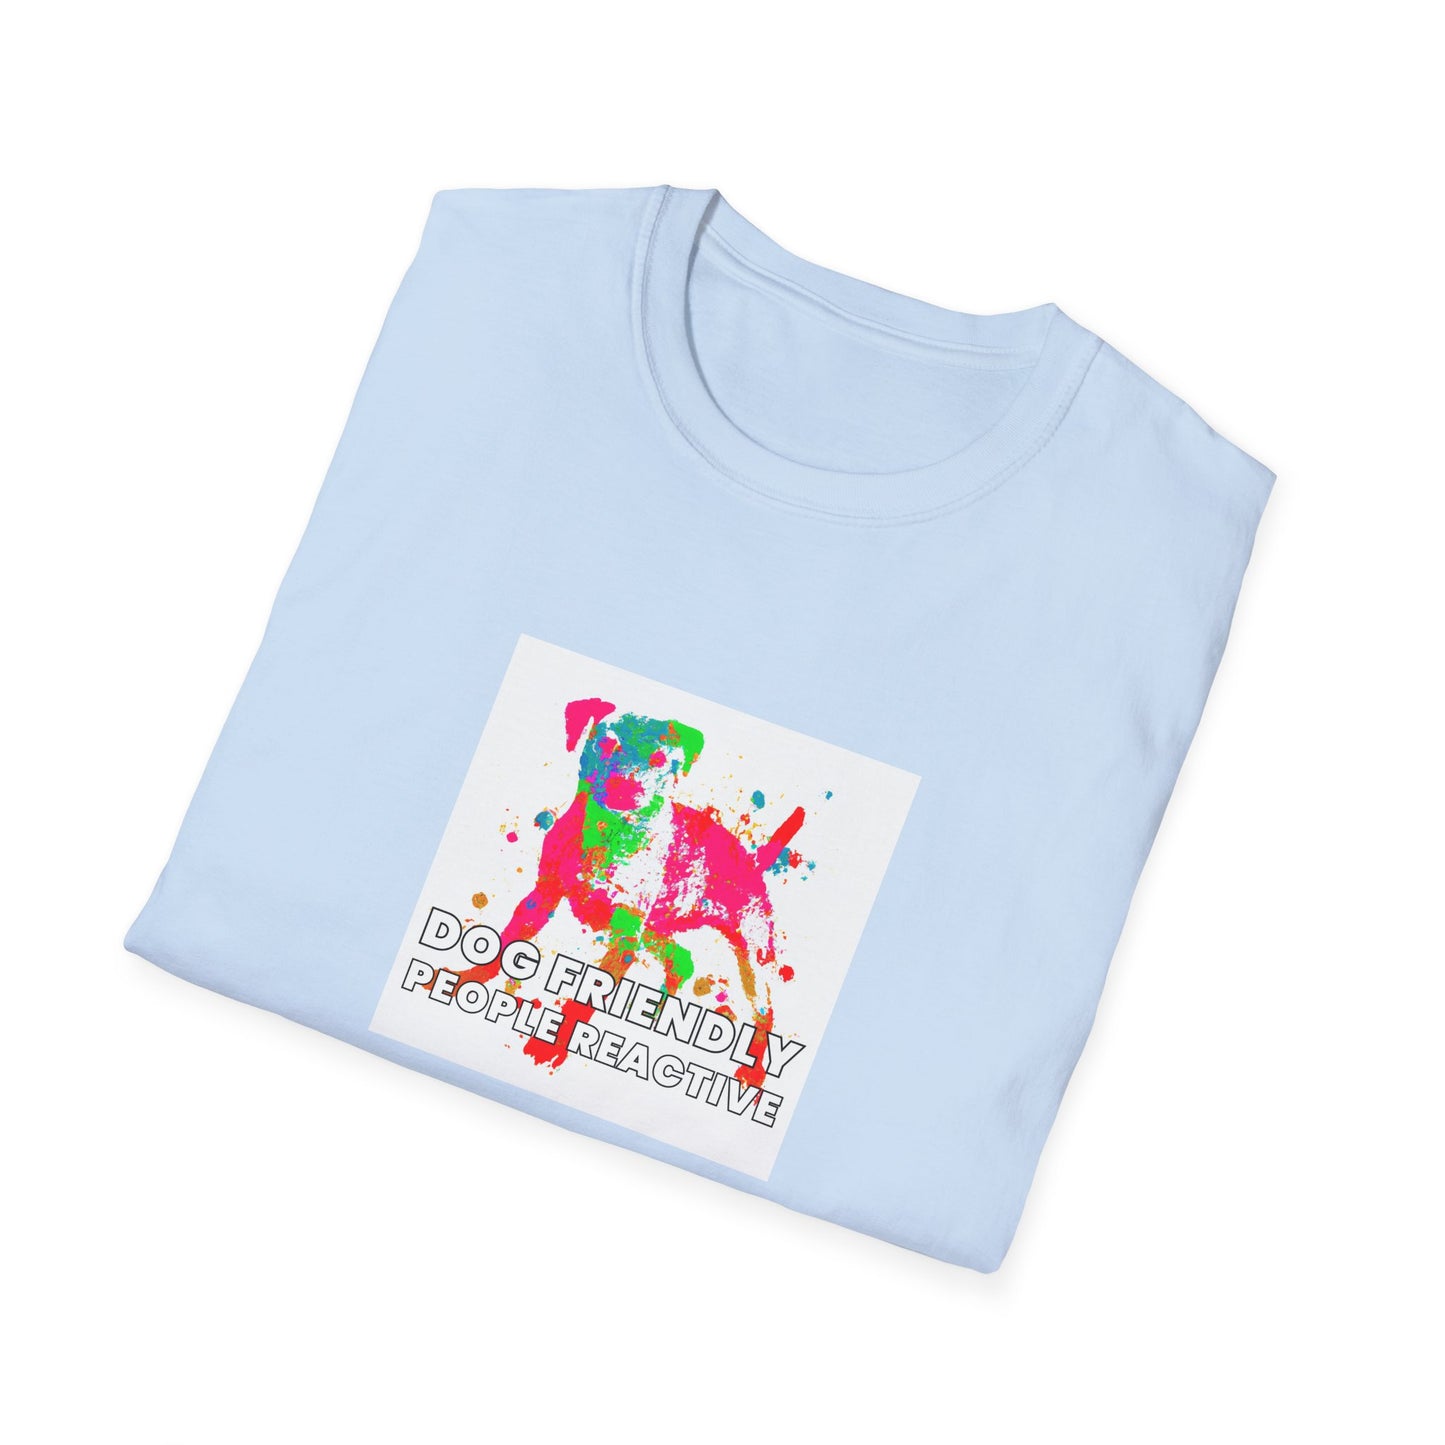 JuviClark Streetwear - "Dog Friendly, People Reactive" (colored swirl) Unisex Tee